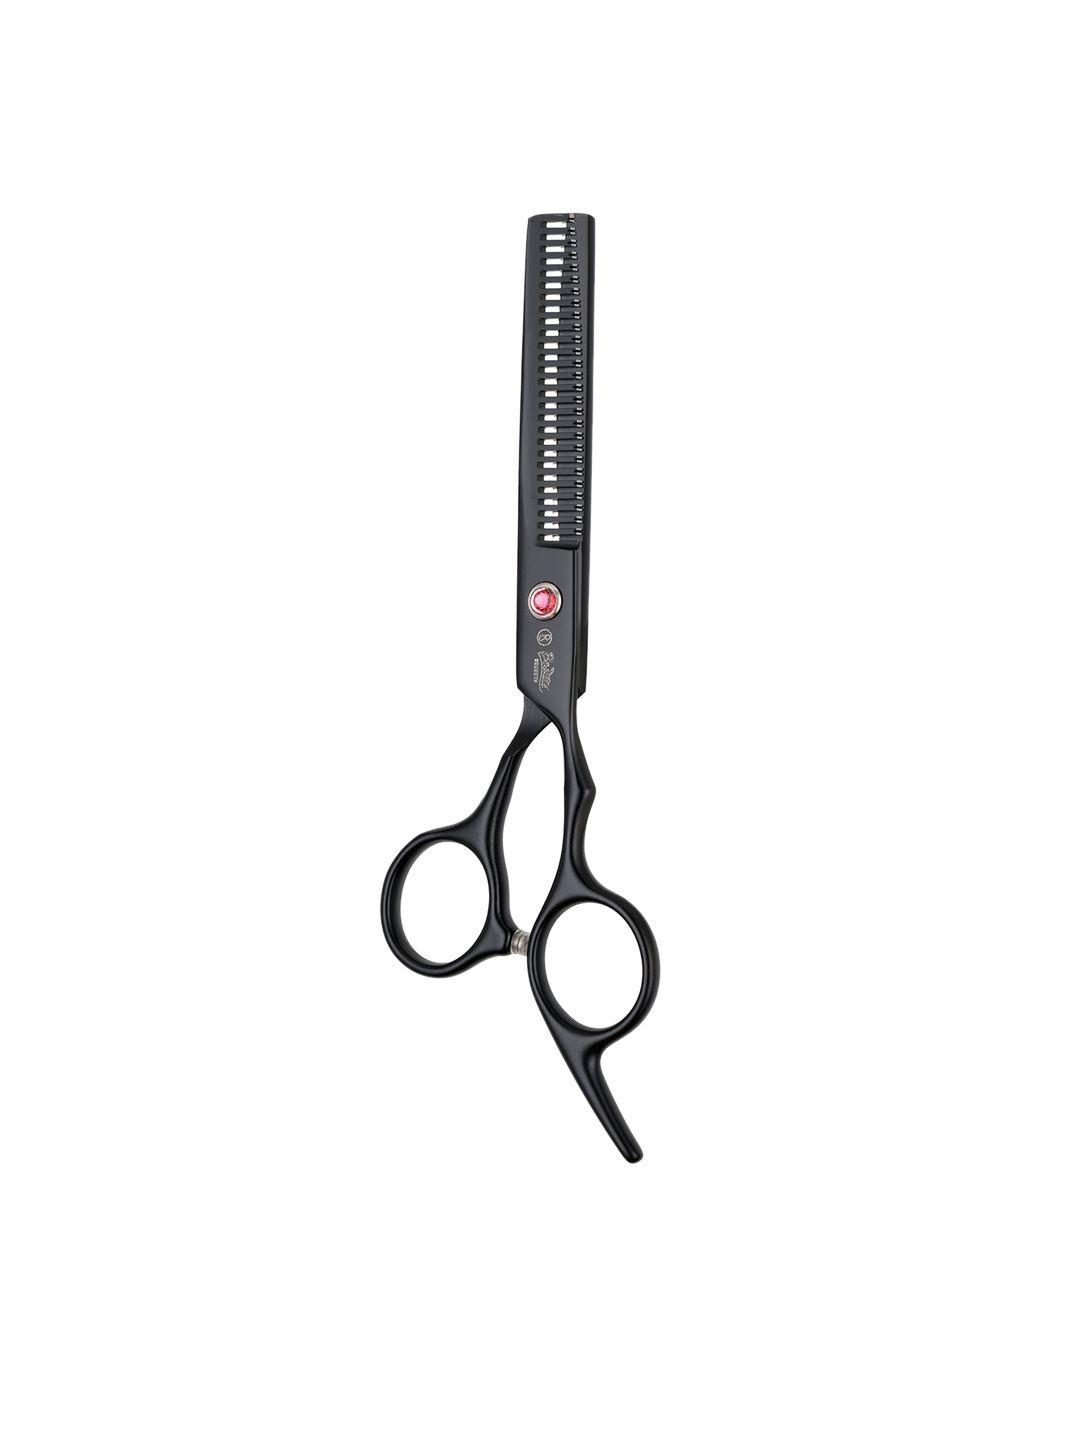 beaute secrets hair thinning salon scissors - black